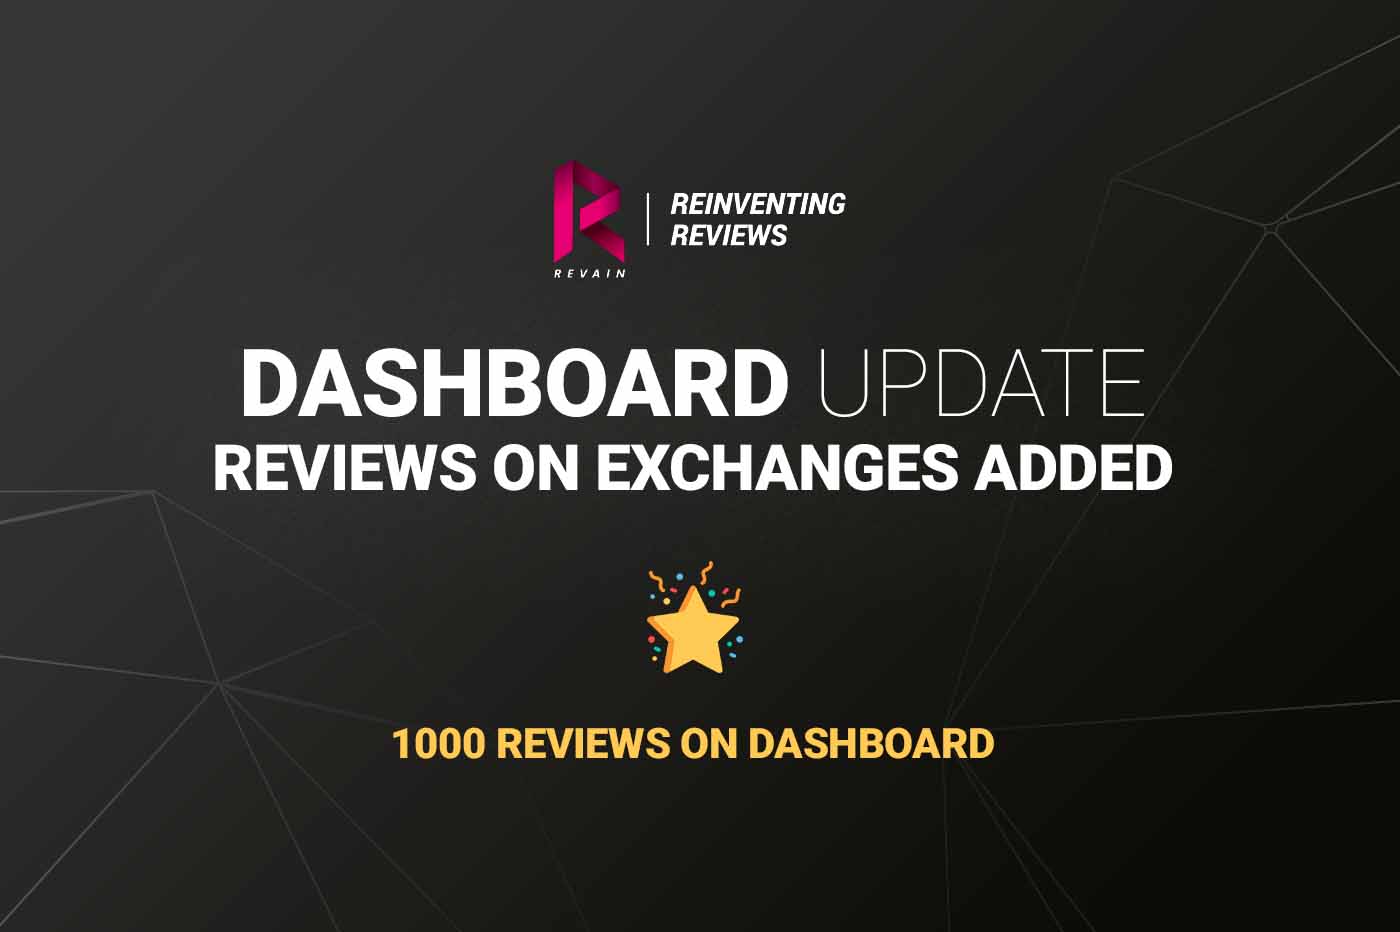 Revain announces Dashboard’s next major version 0.6 as the platform hits 1000 reviews